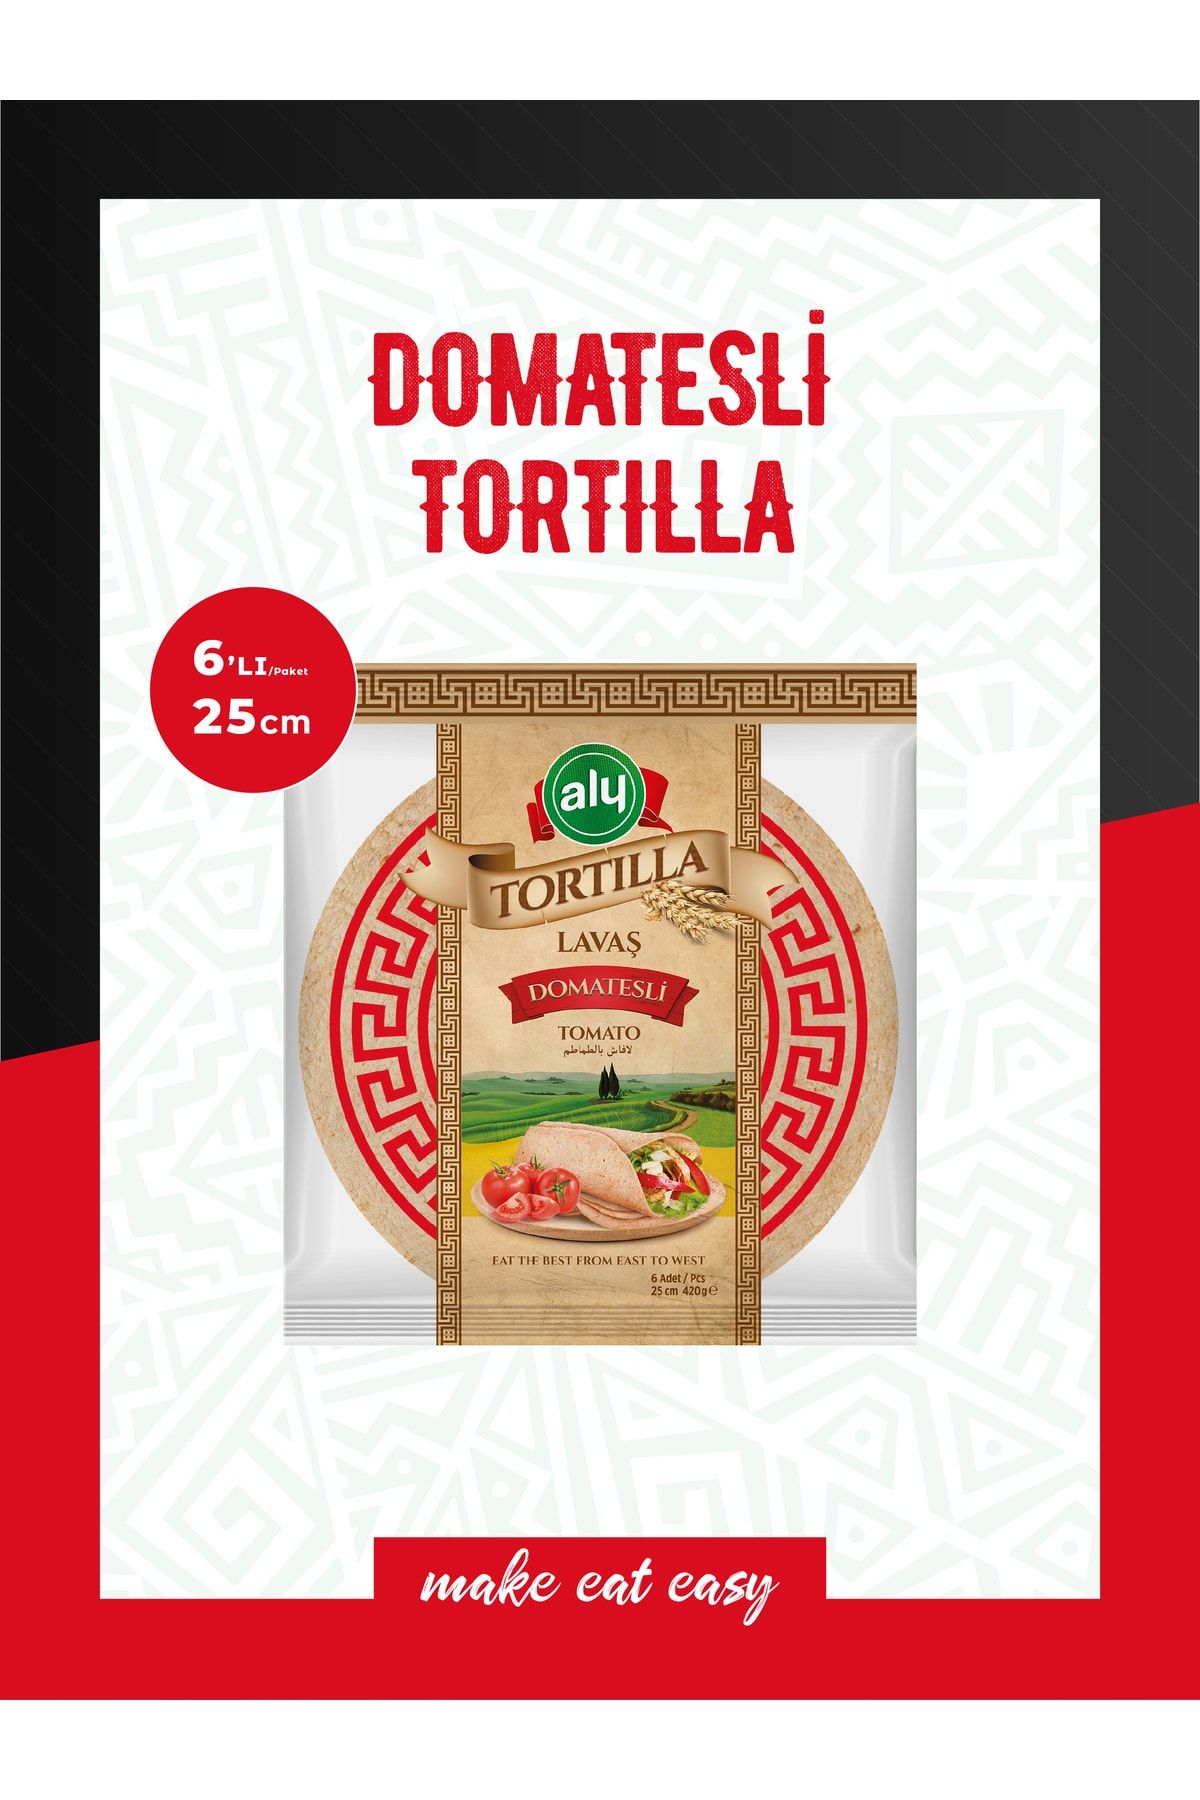 Aly Domatesli Tortilla Lavaş 25 cm 6'lı Paket 420g